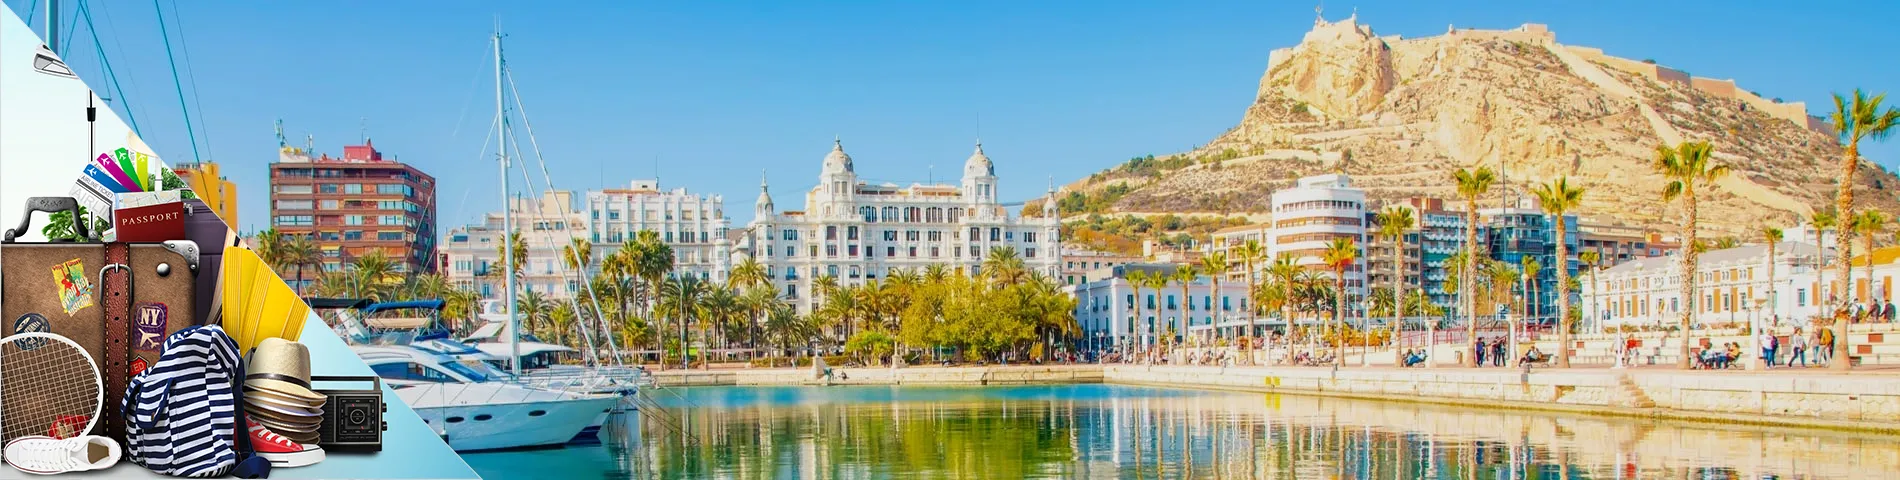 Alicante - Turizm için İspanyolca 